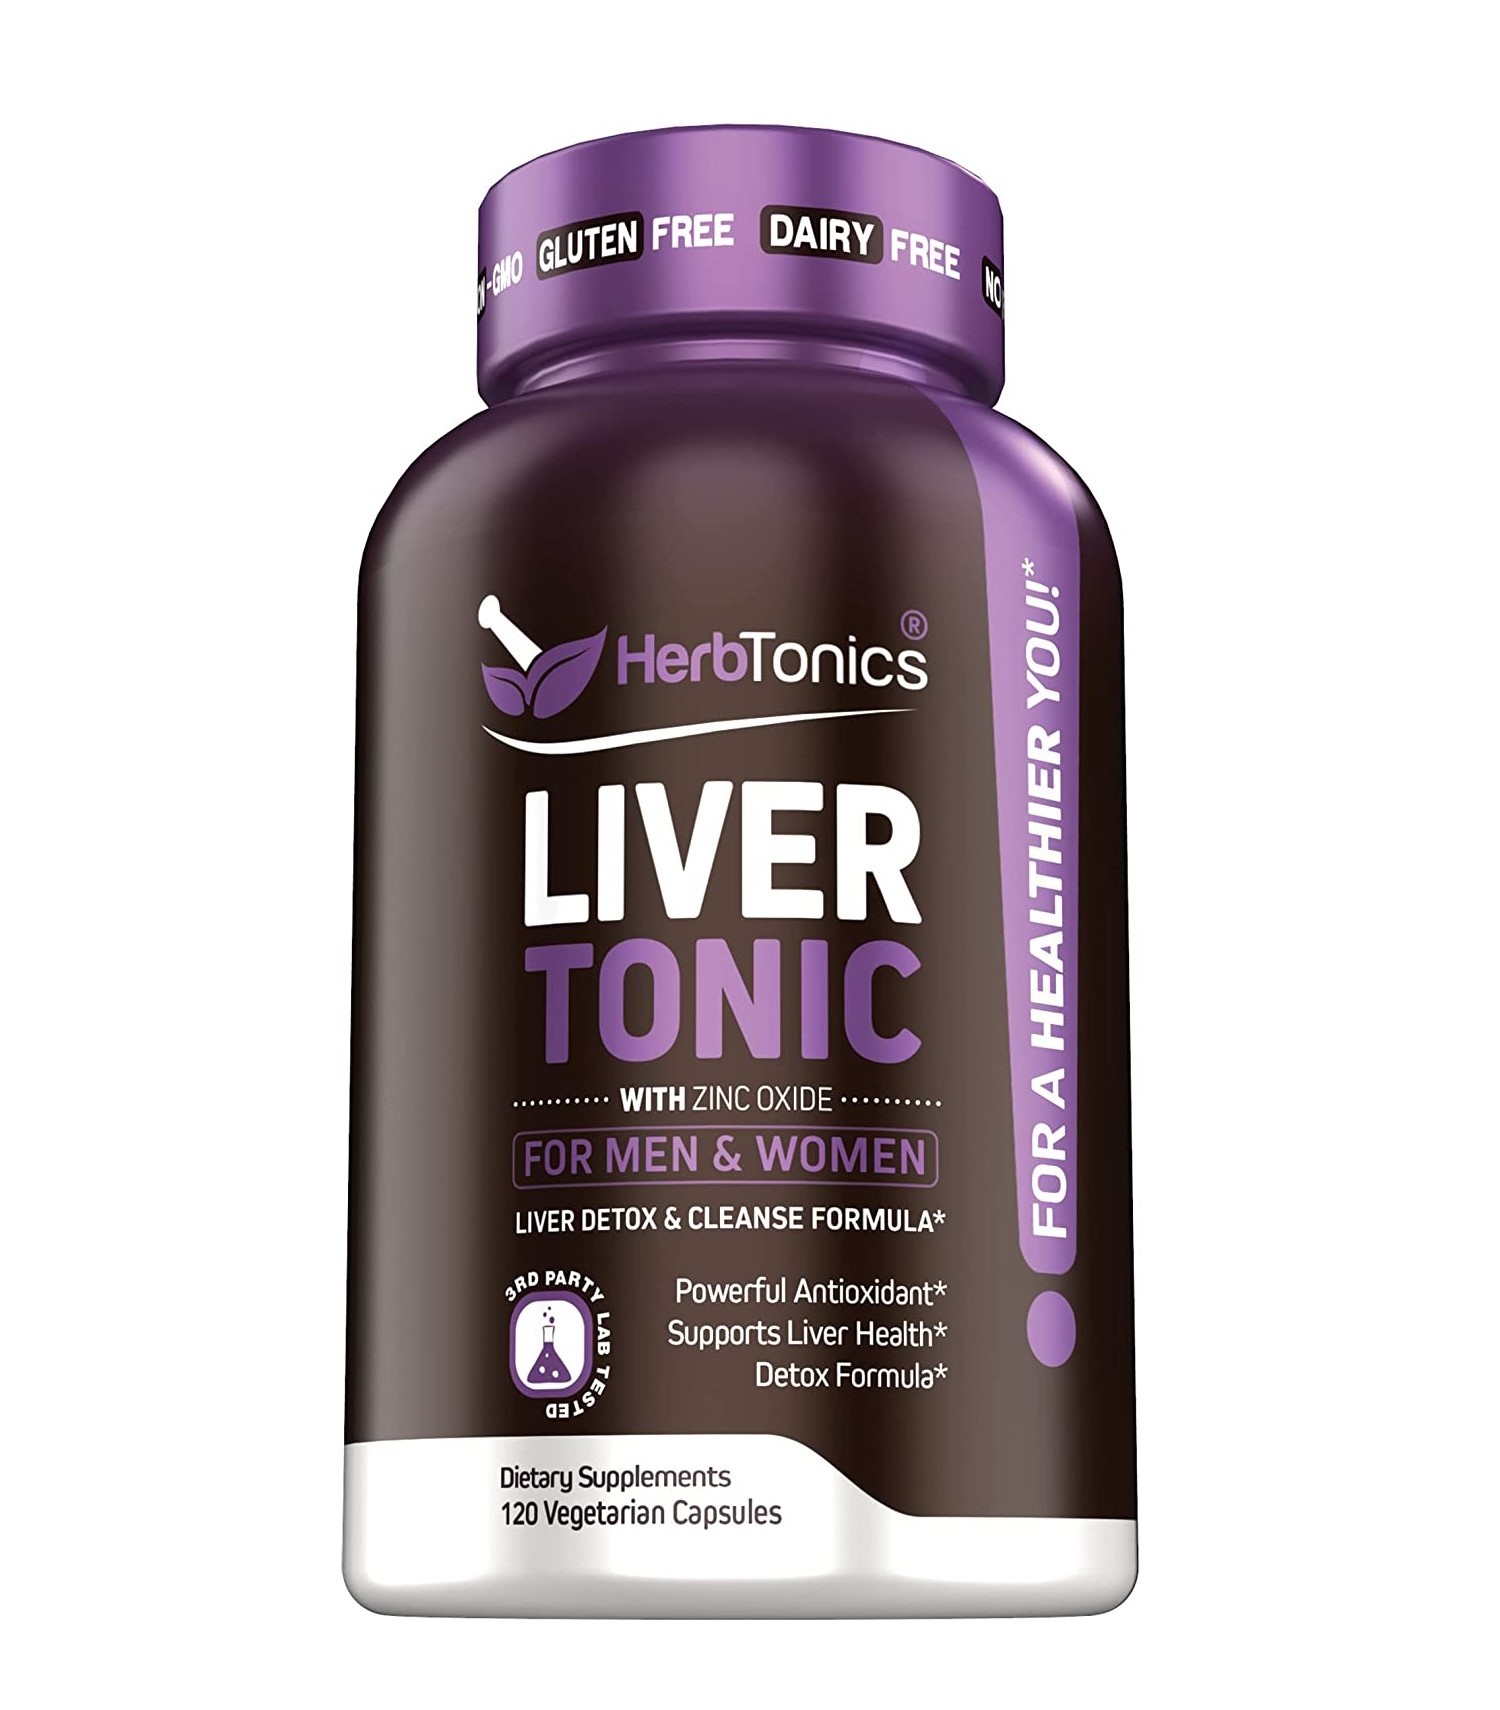 HerbTonics Liver Tonic